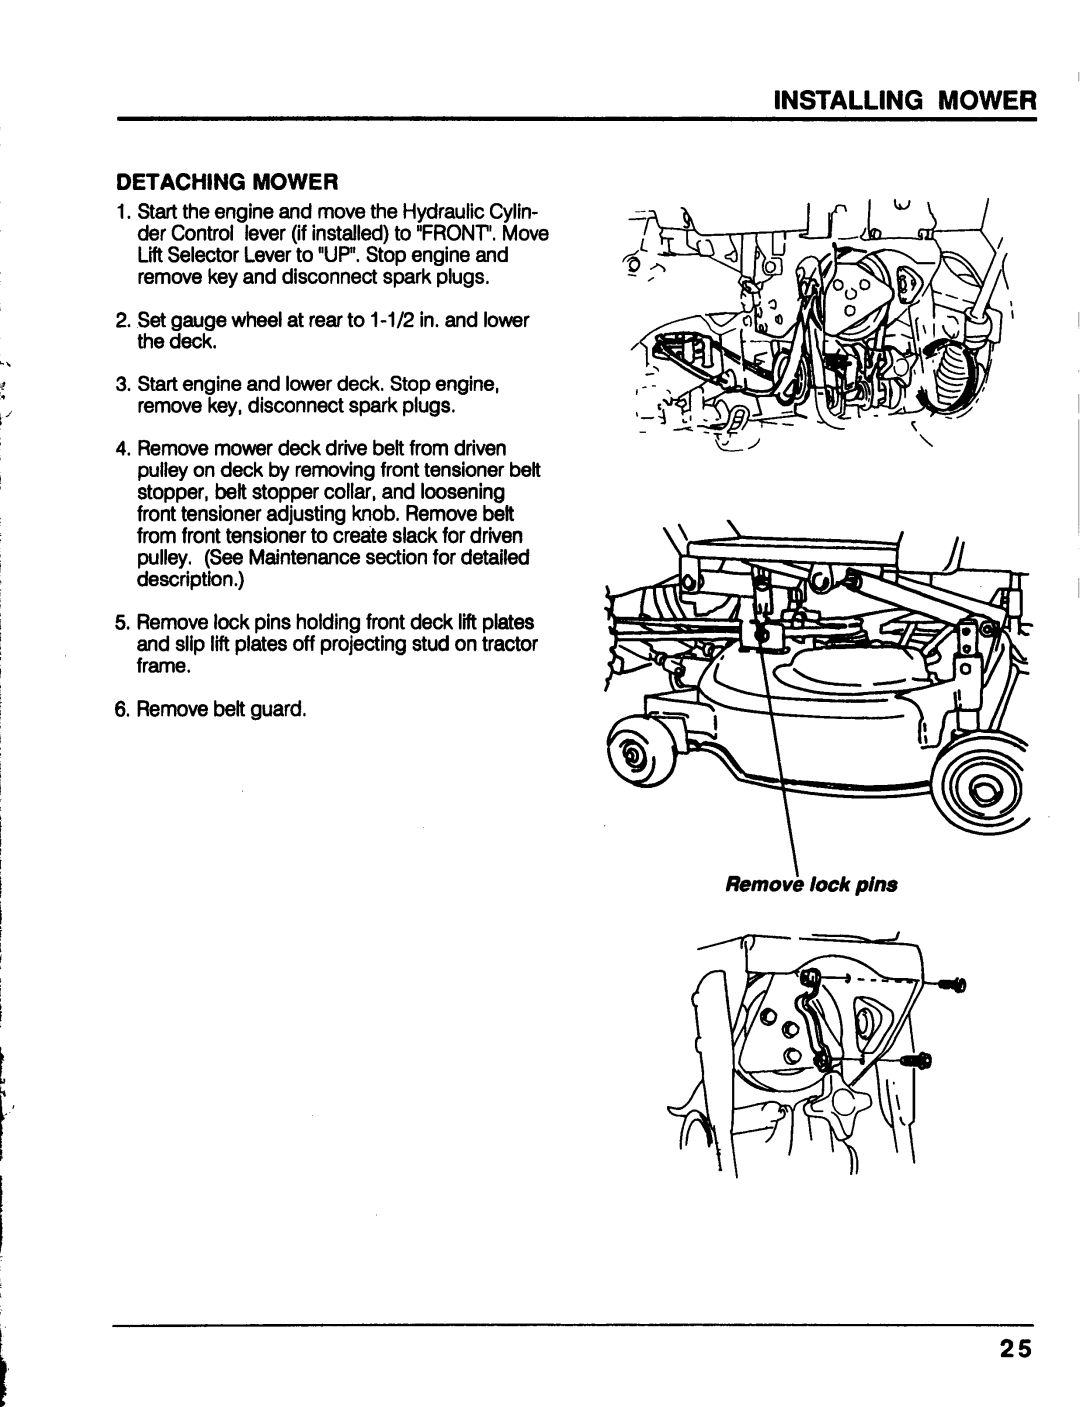 Honda Power Equipment MM52 manual Removb lock pins 